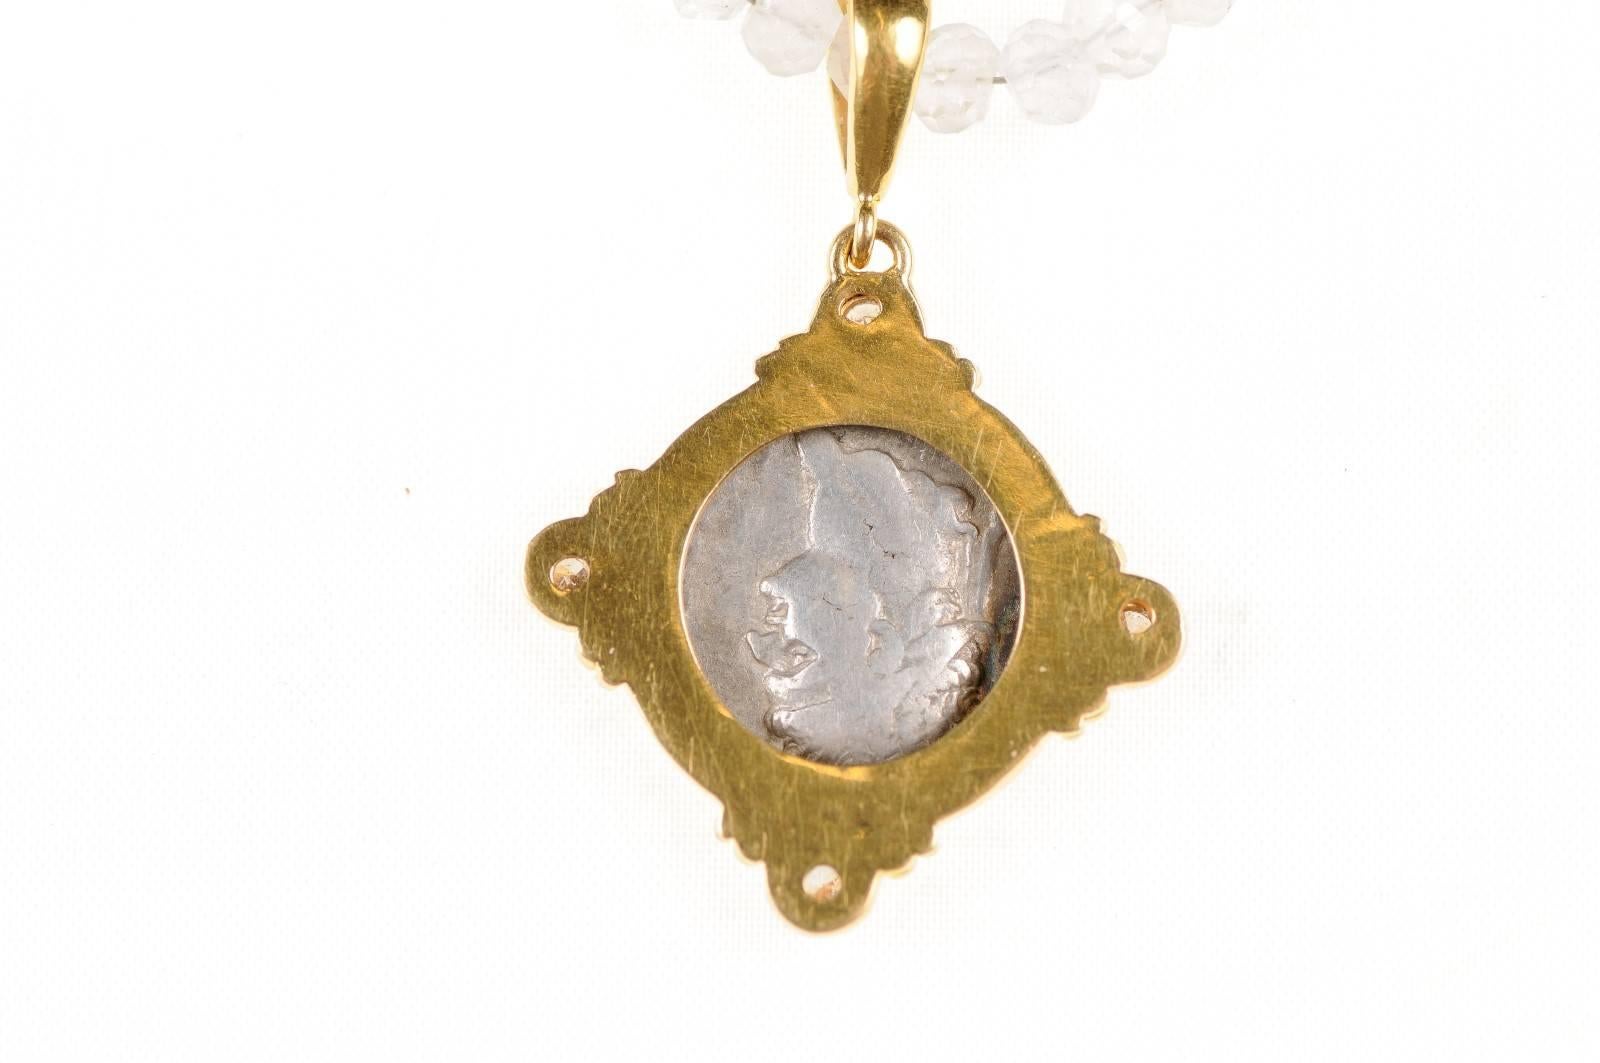 Roman Empire Domitian Coin circa 81-96 AD Set in Gold with Diamond Accents For Sale 2